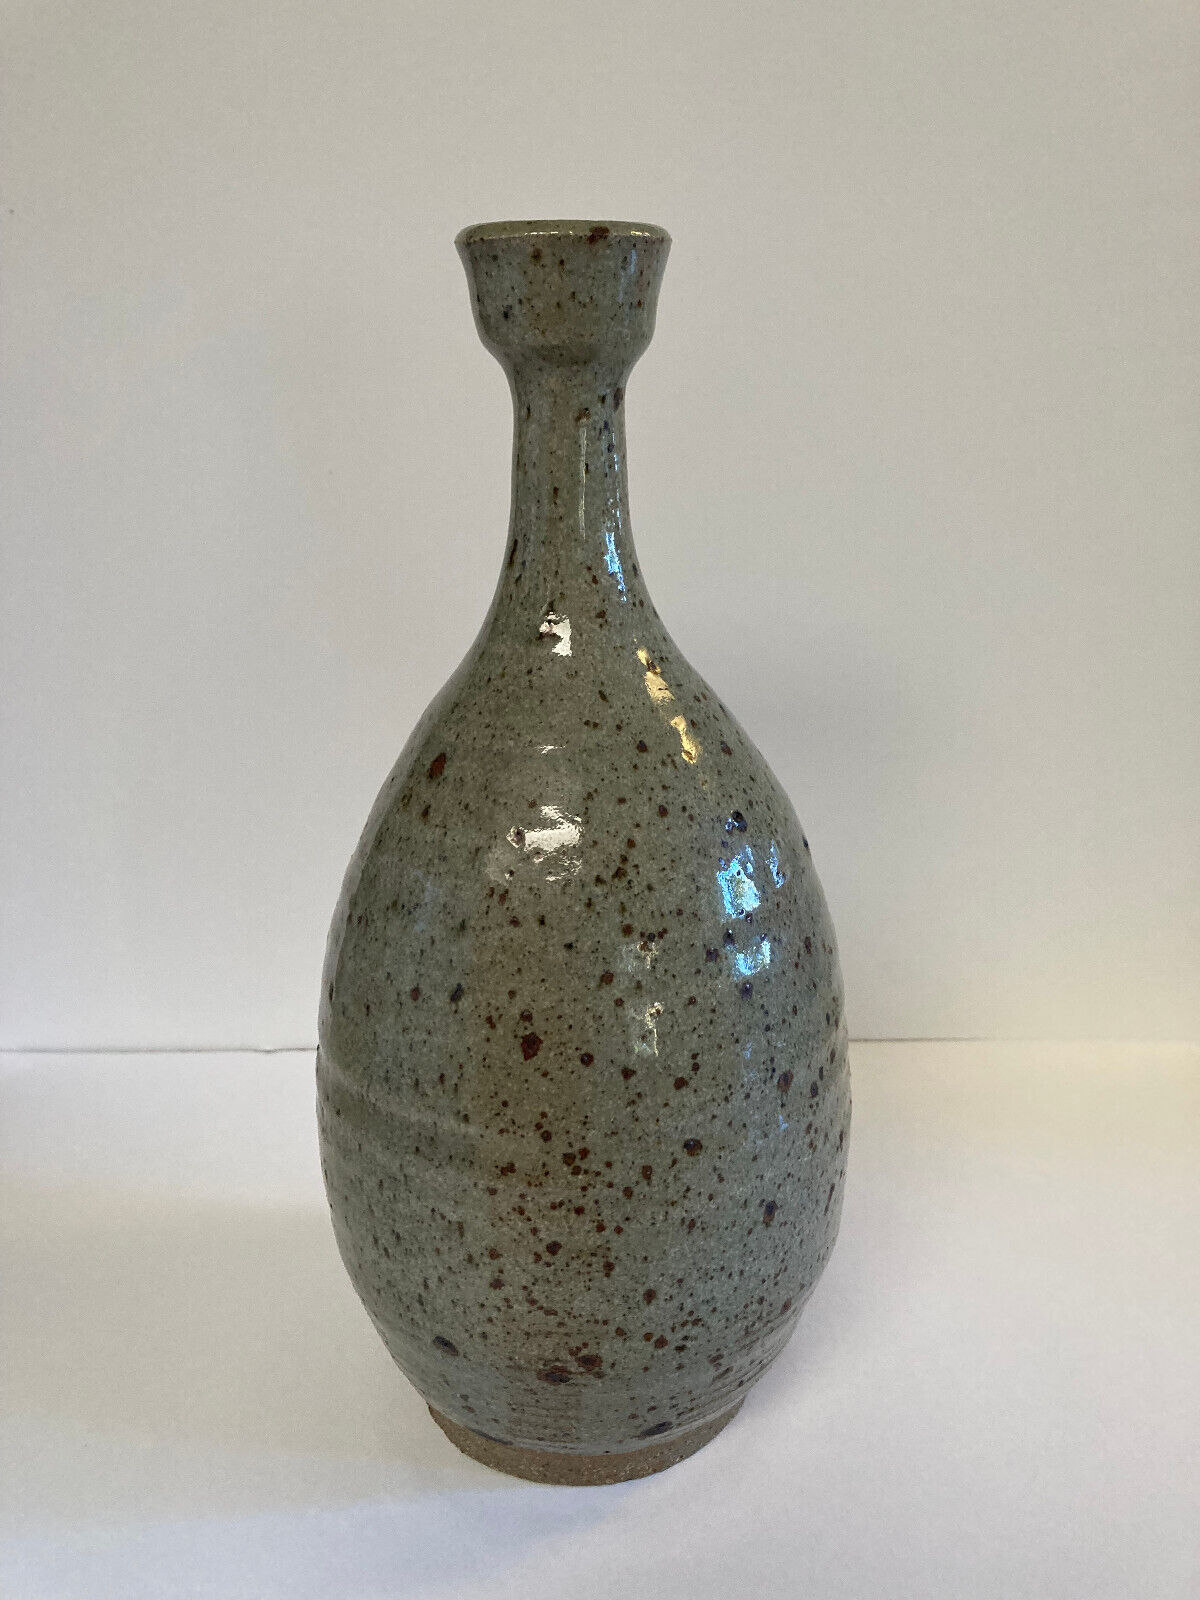 1970s Signed Artist Art Pottery Vintage Weed Pot Vase Speckle Glaze Mid Century